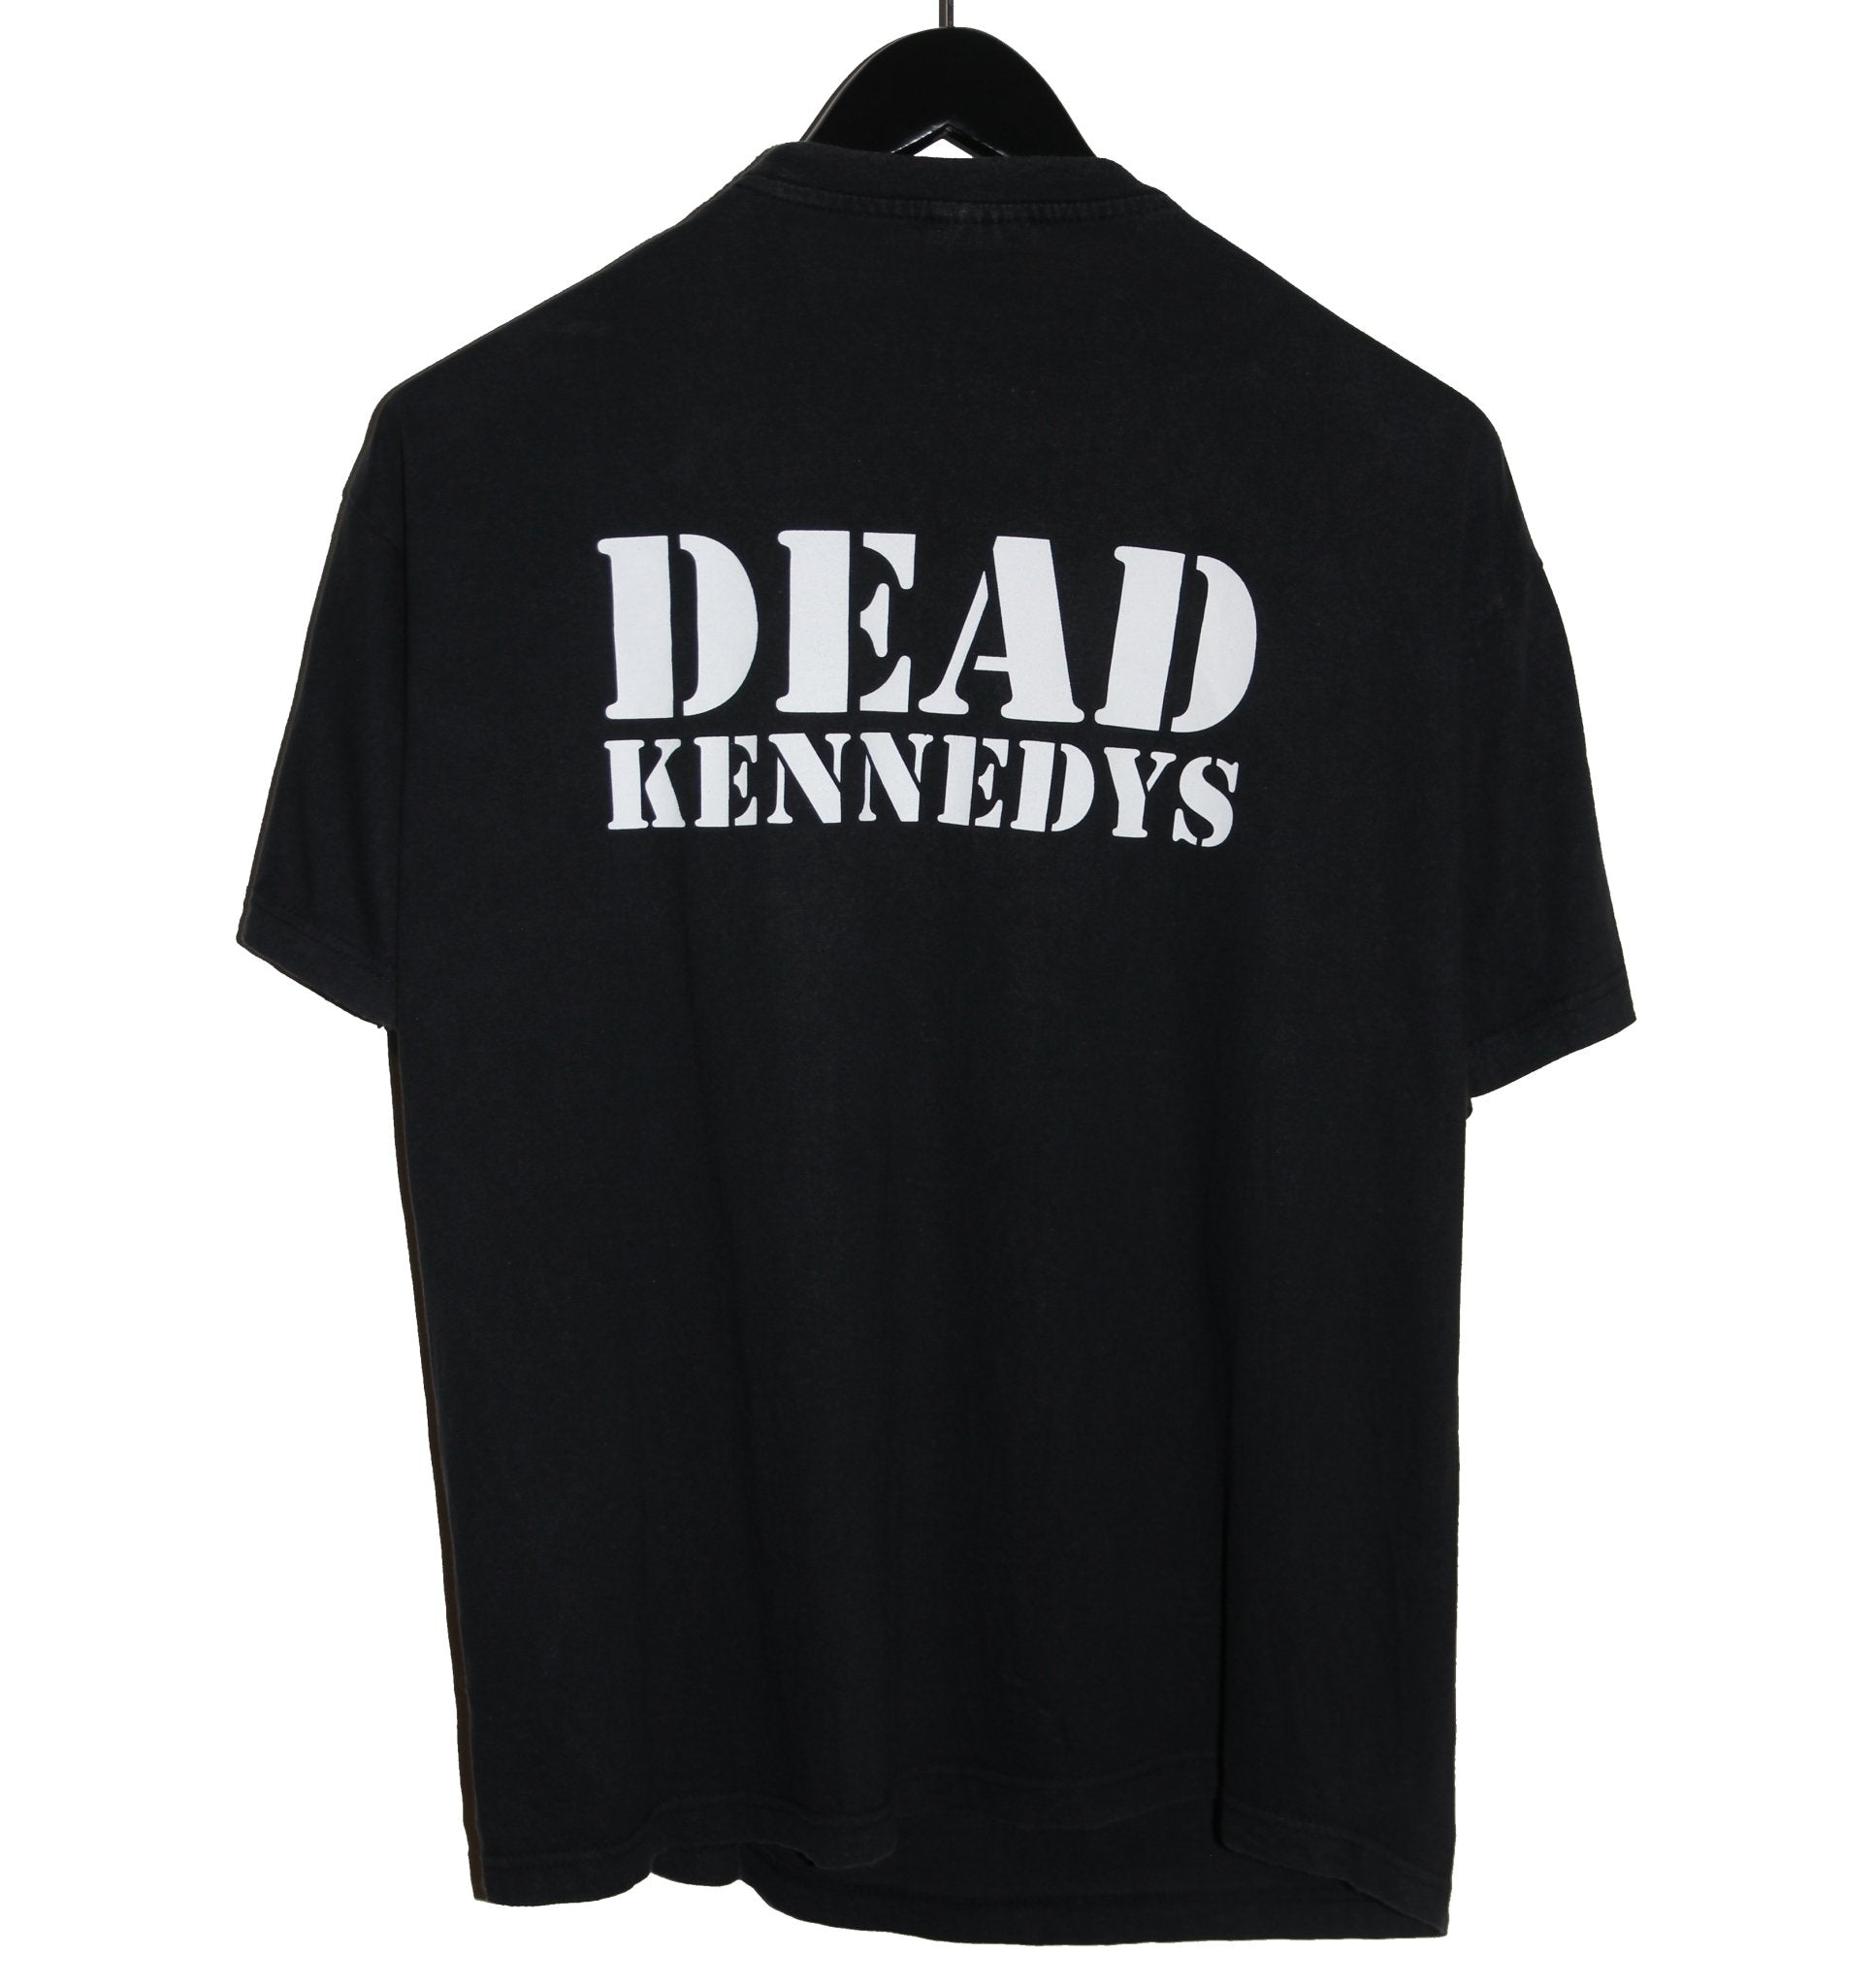 Dead Kennedys 90's Shirt - Faded AU